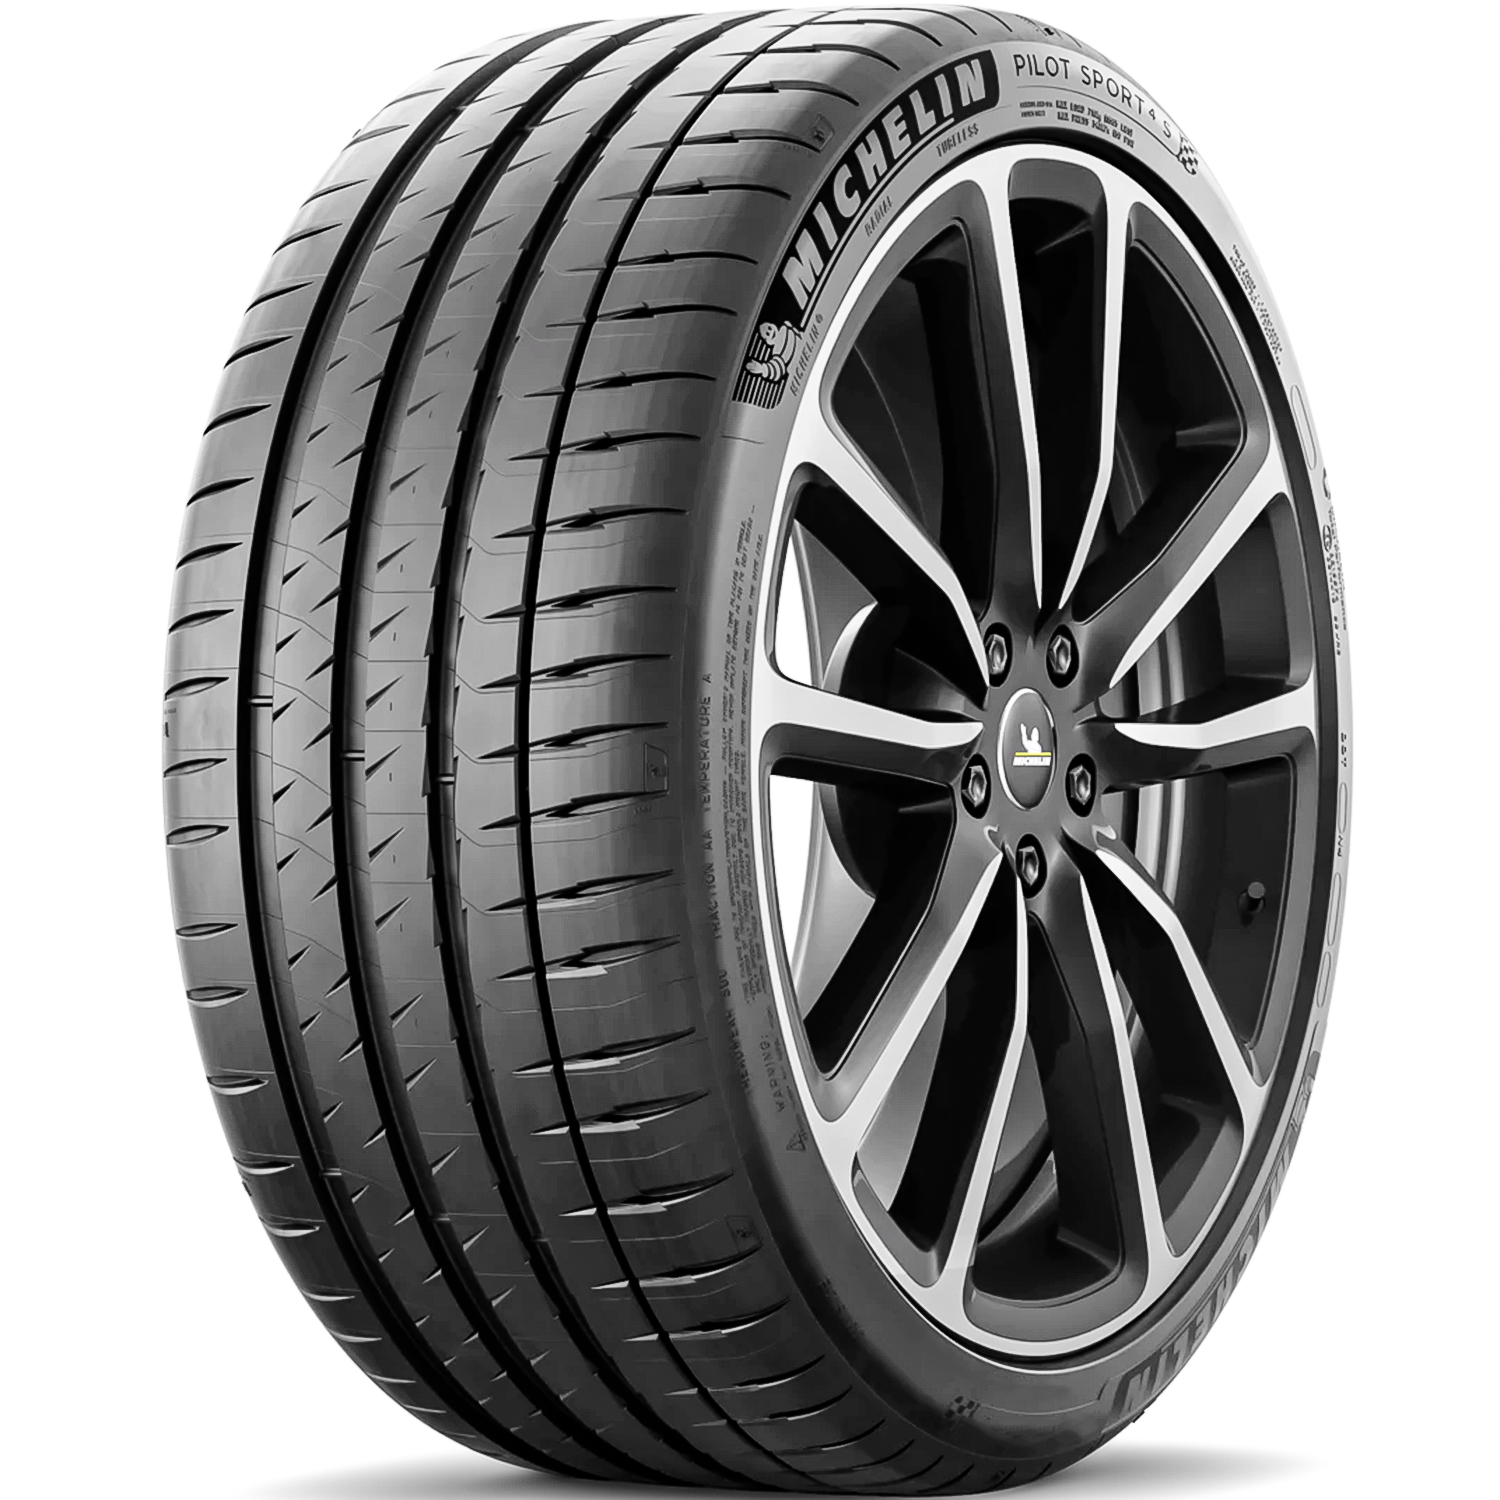 Michelin Pilot Sport 4S Performance 215/45ZR17 (91Y) XL Passenger Tire - image 1 of 8